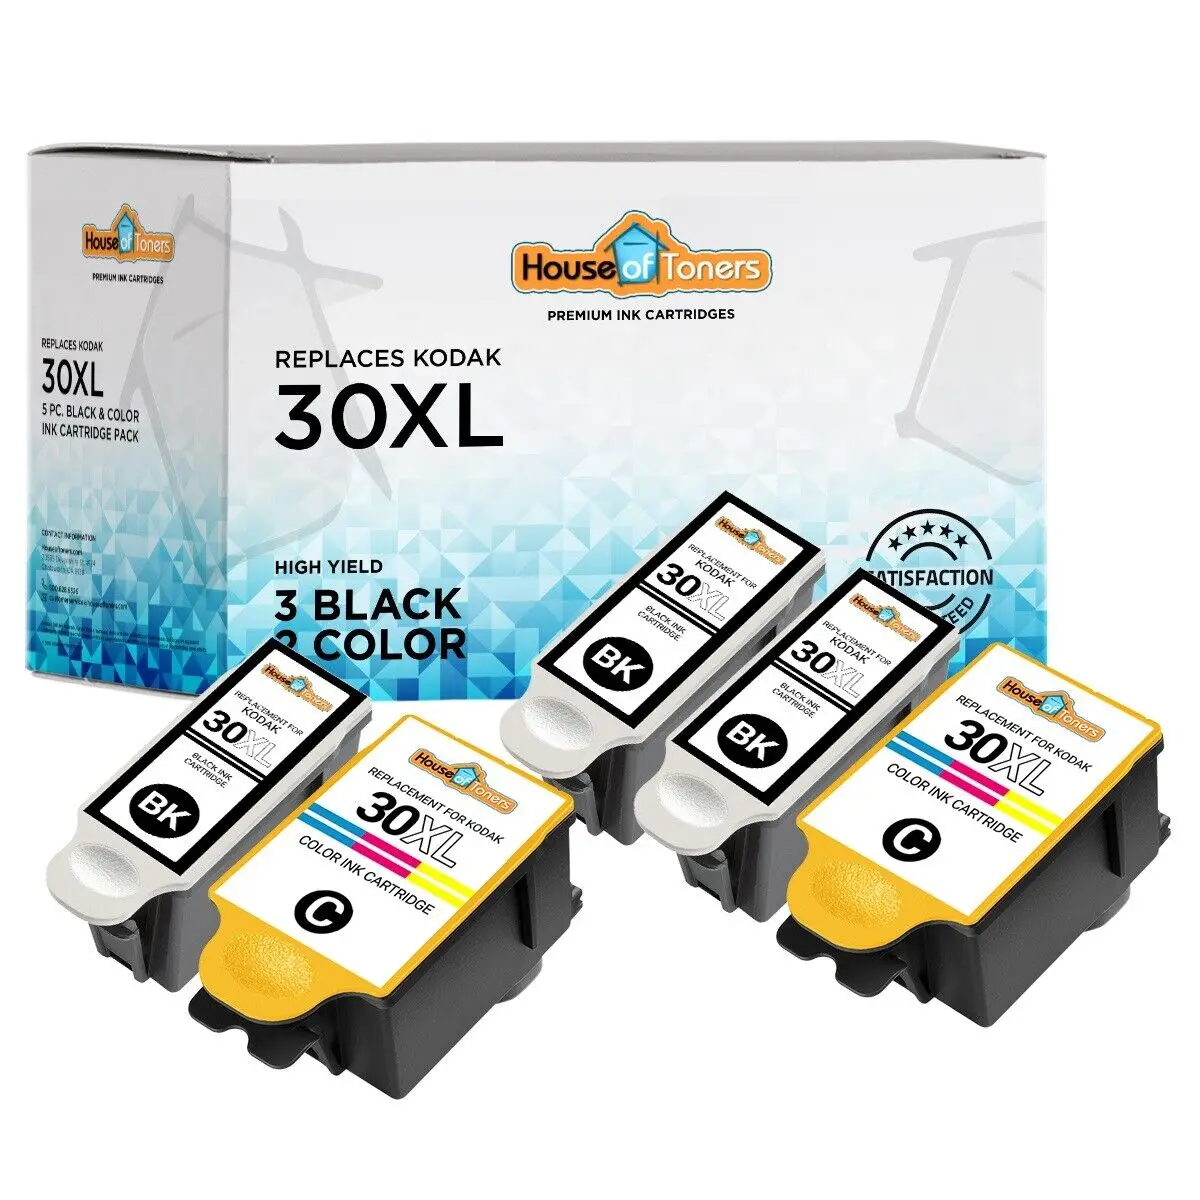 

5PK 30XL Ink Cartridges for Kodak ESP 1.2 Hero 4.2 ESP C310 Hero 2.2 Printer